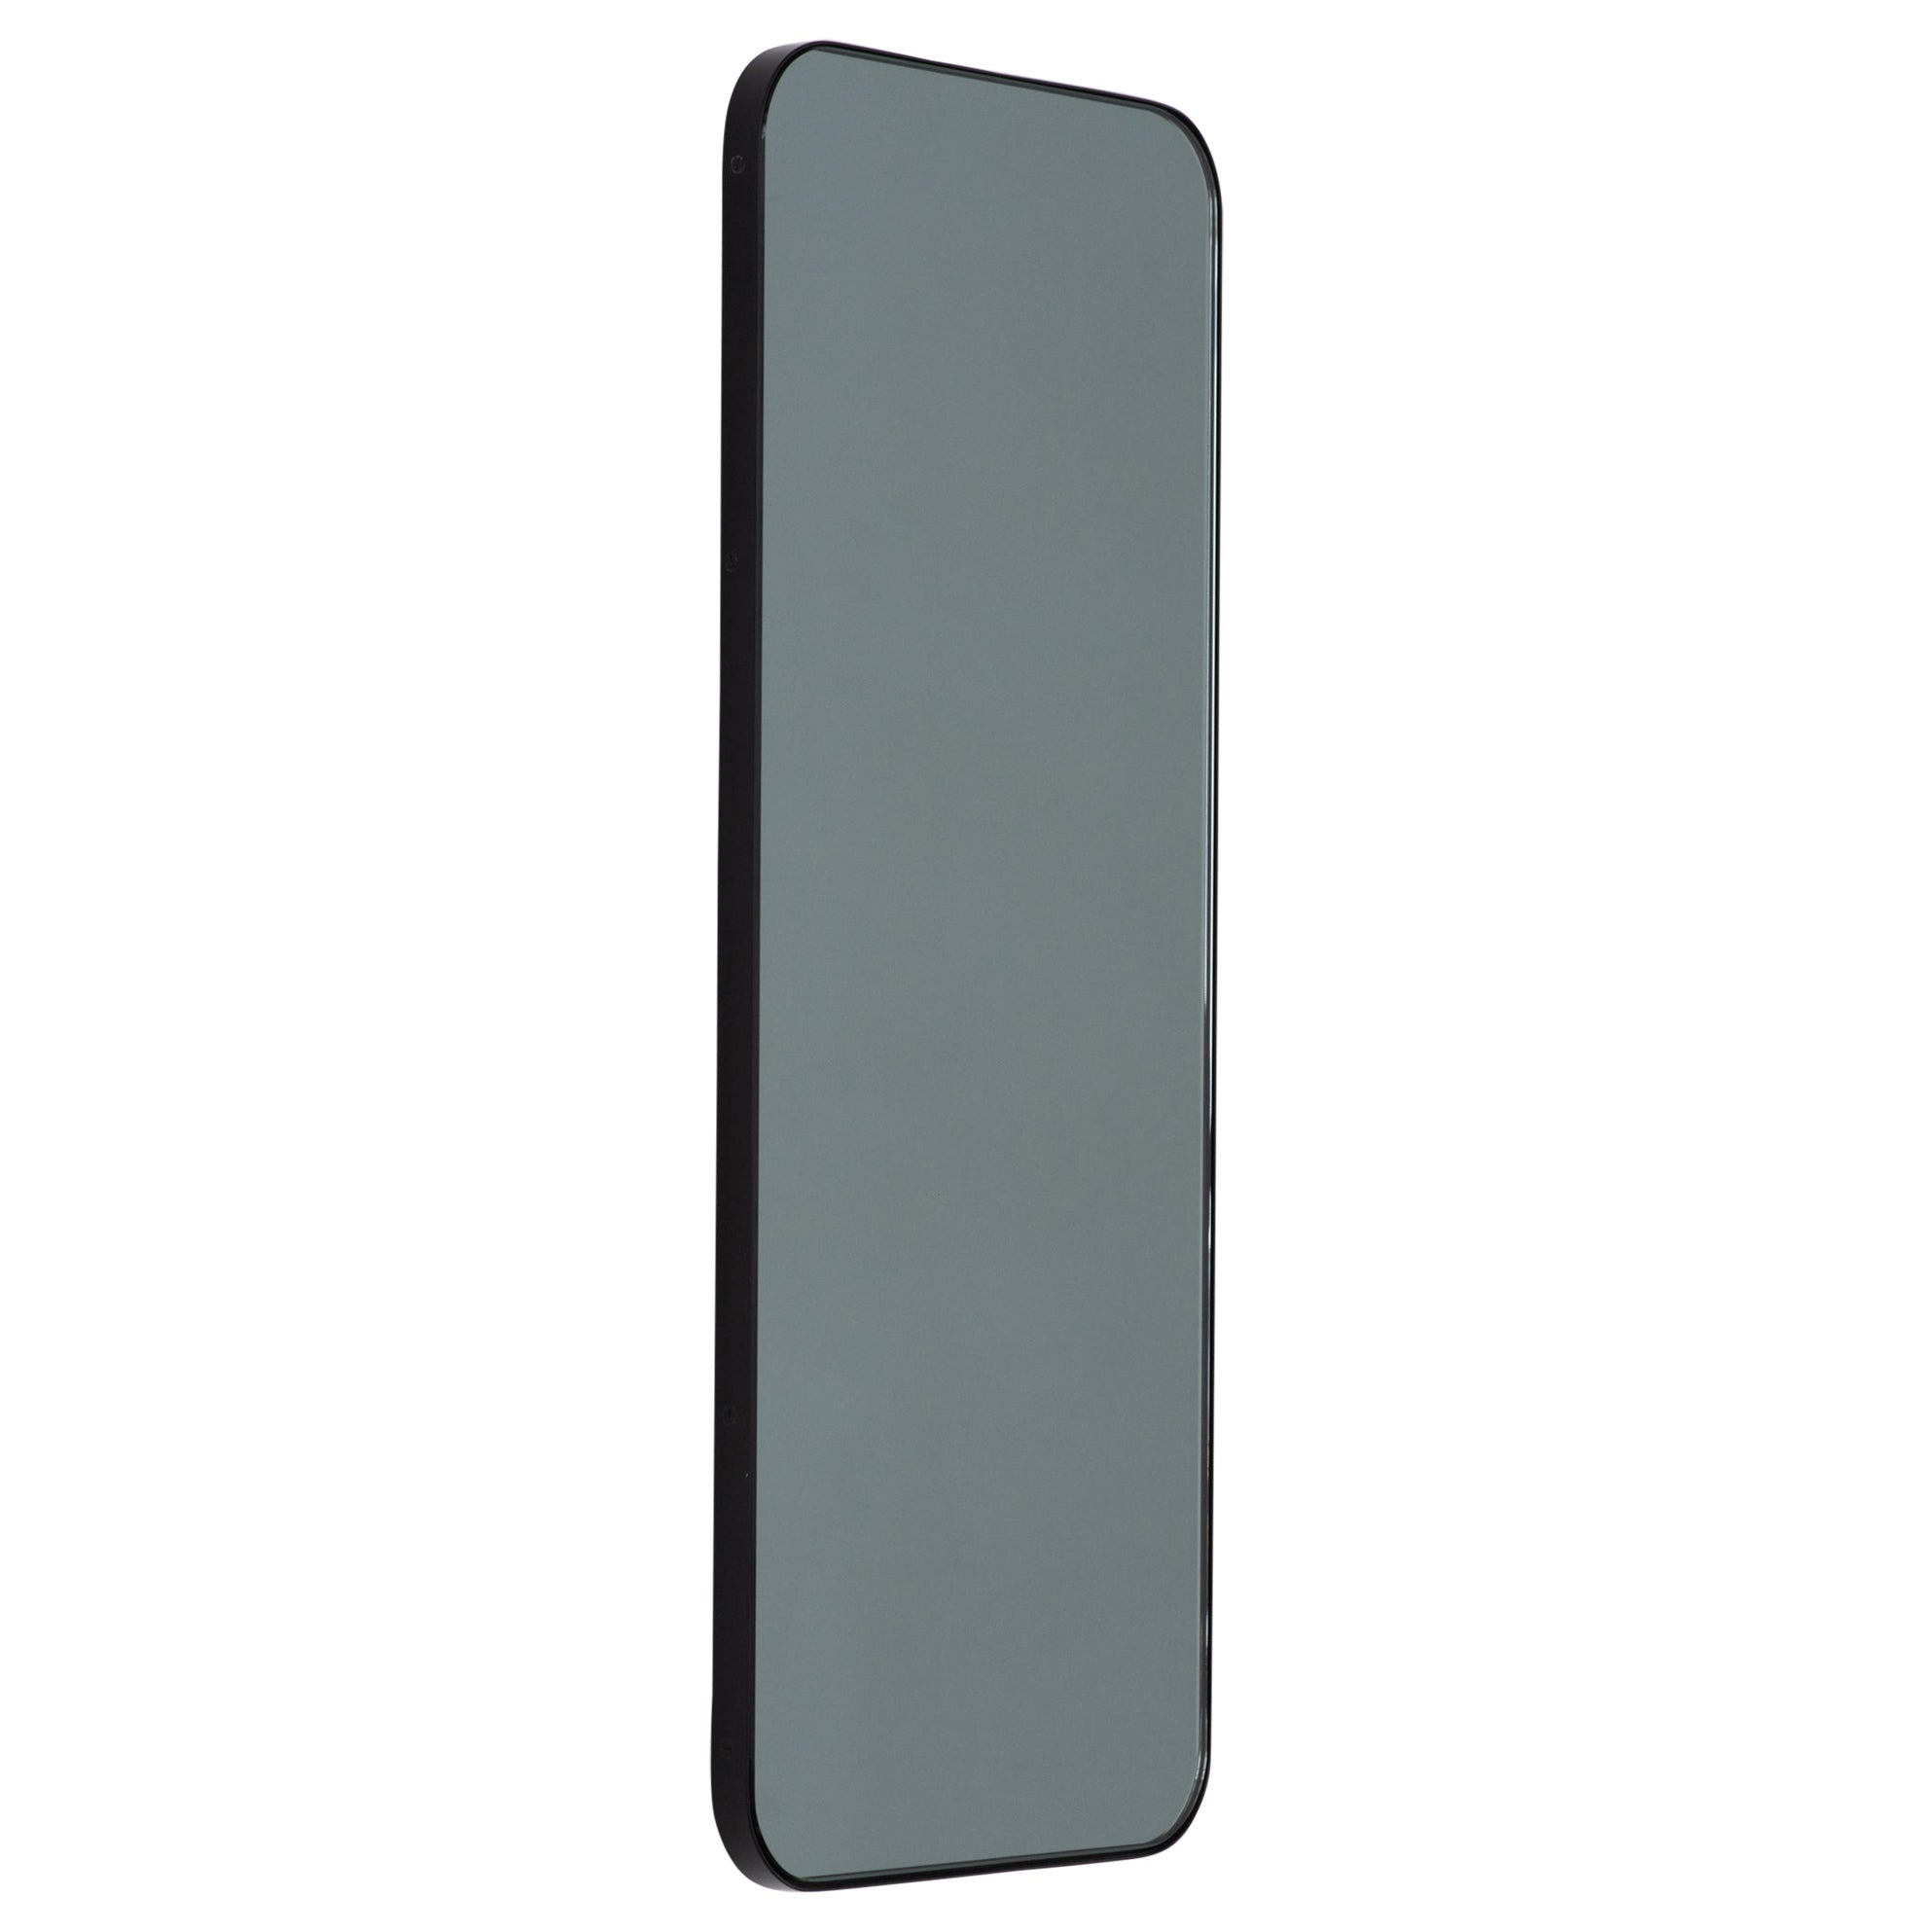 Quadris Black Tinted Rectangular Minimalist Mirror with a Black Frame, XL